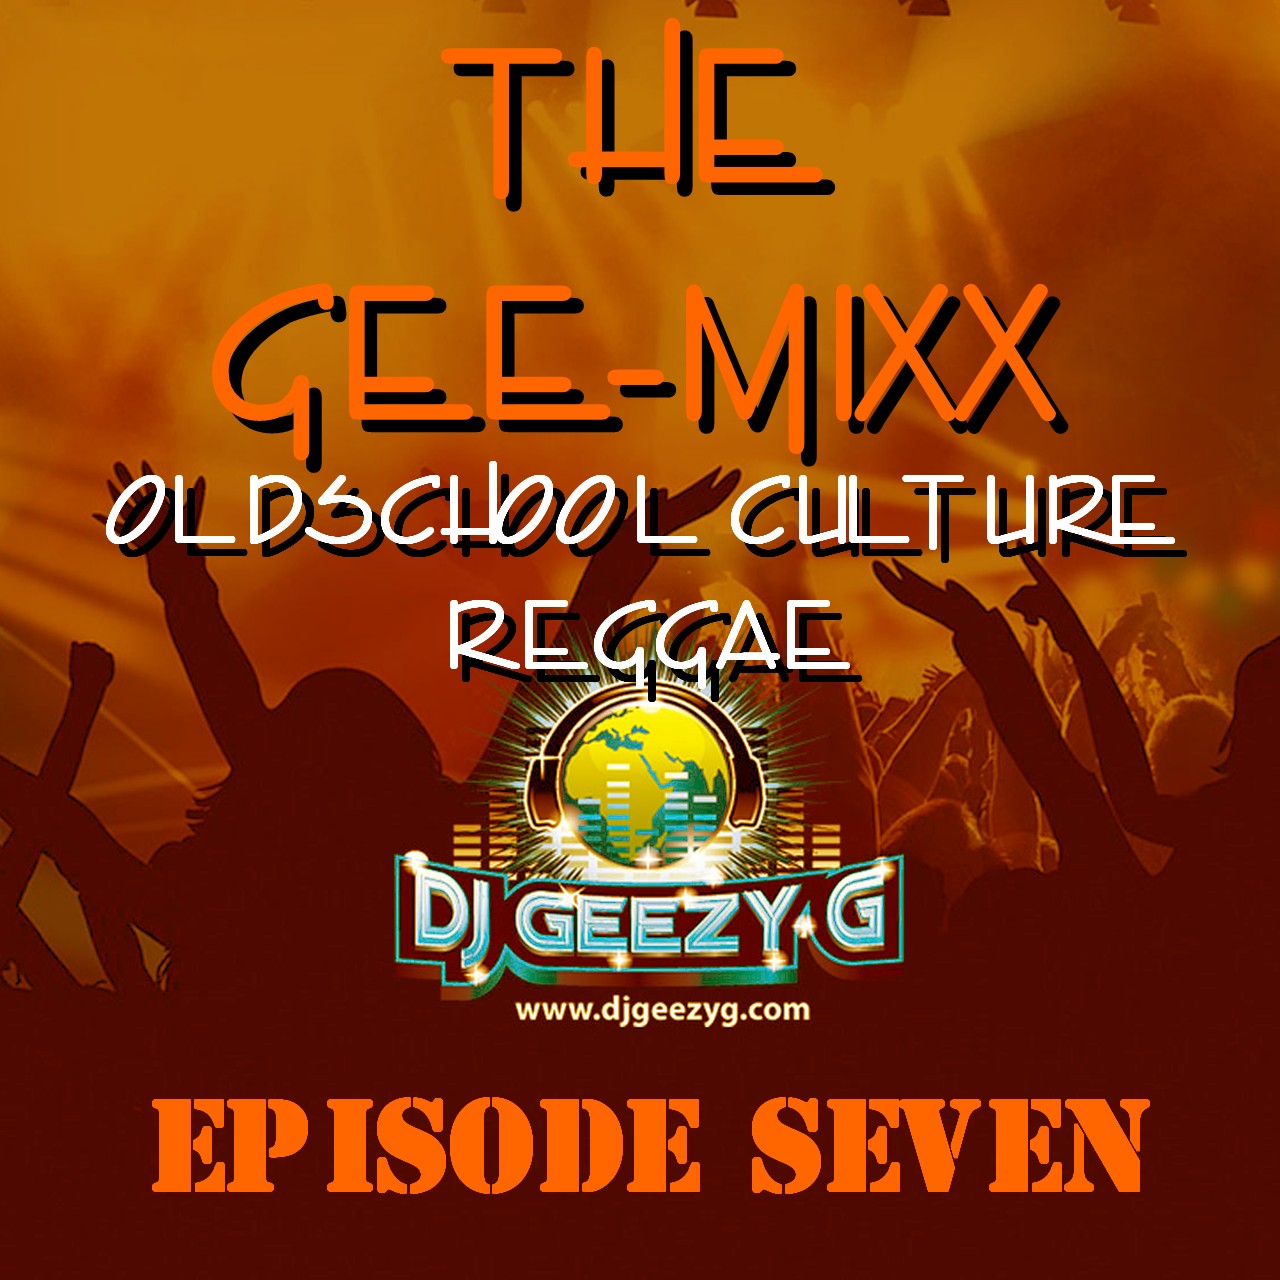 DJ GEEZY G  - THE GEE-MIX (EPISODE SEVEN) OLDSCHOOL CULTURE REGGAE